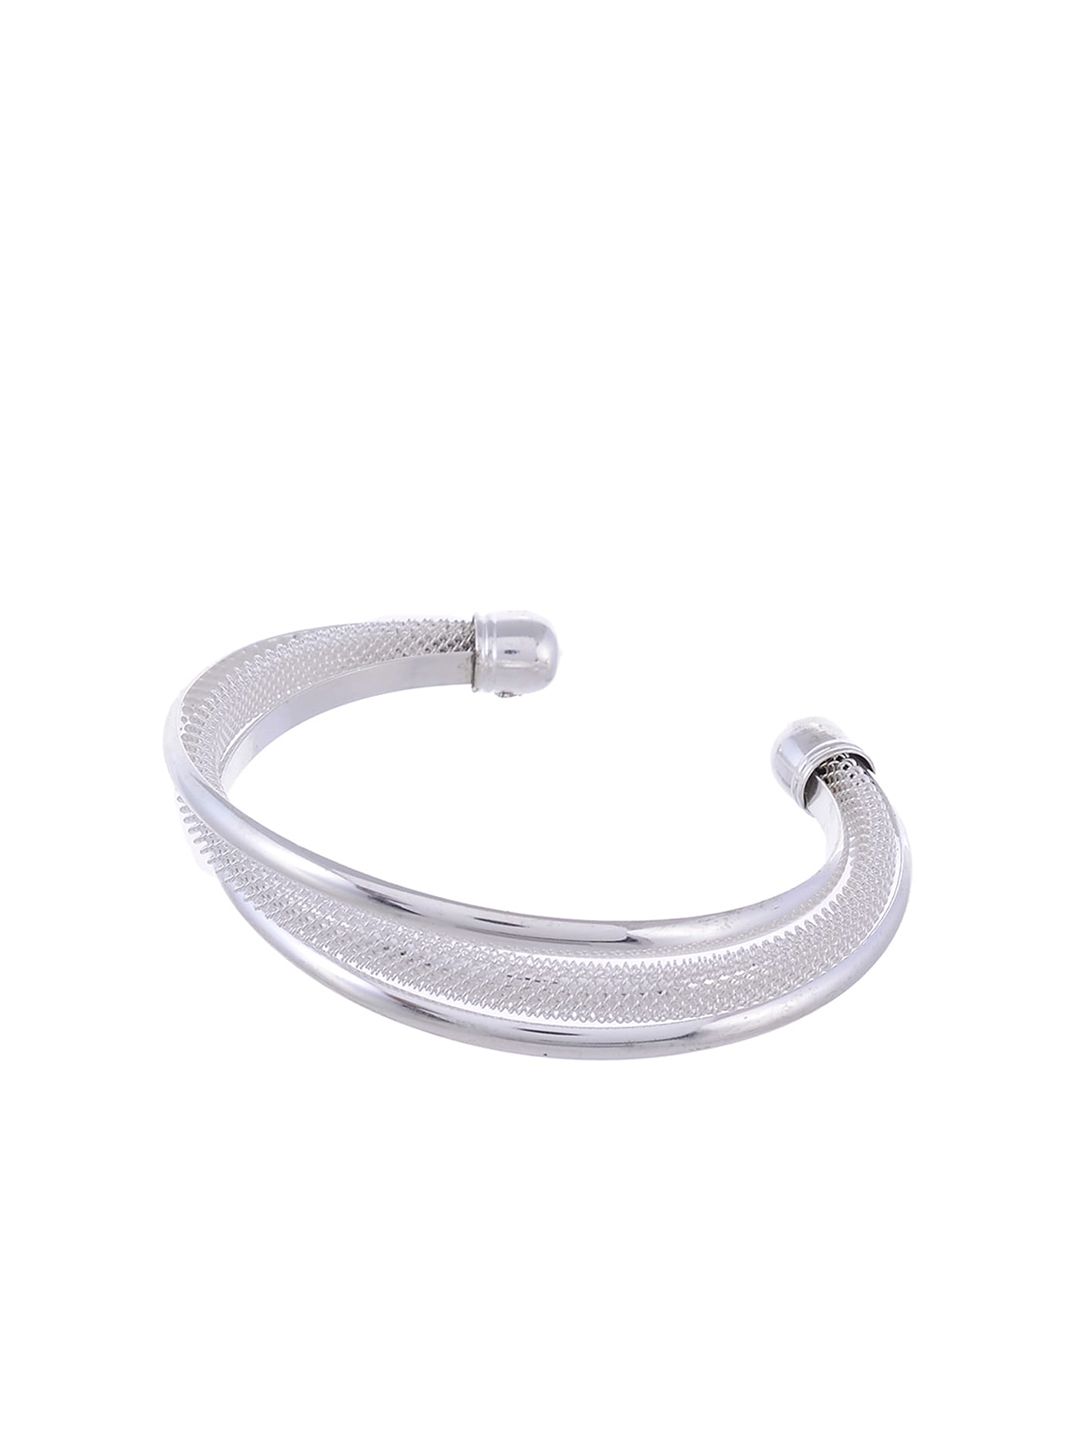 Silvermerc Designs Silver-Toned Bracelet Price in India